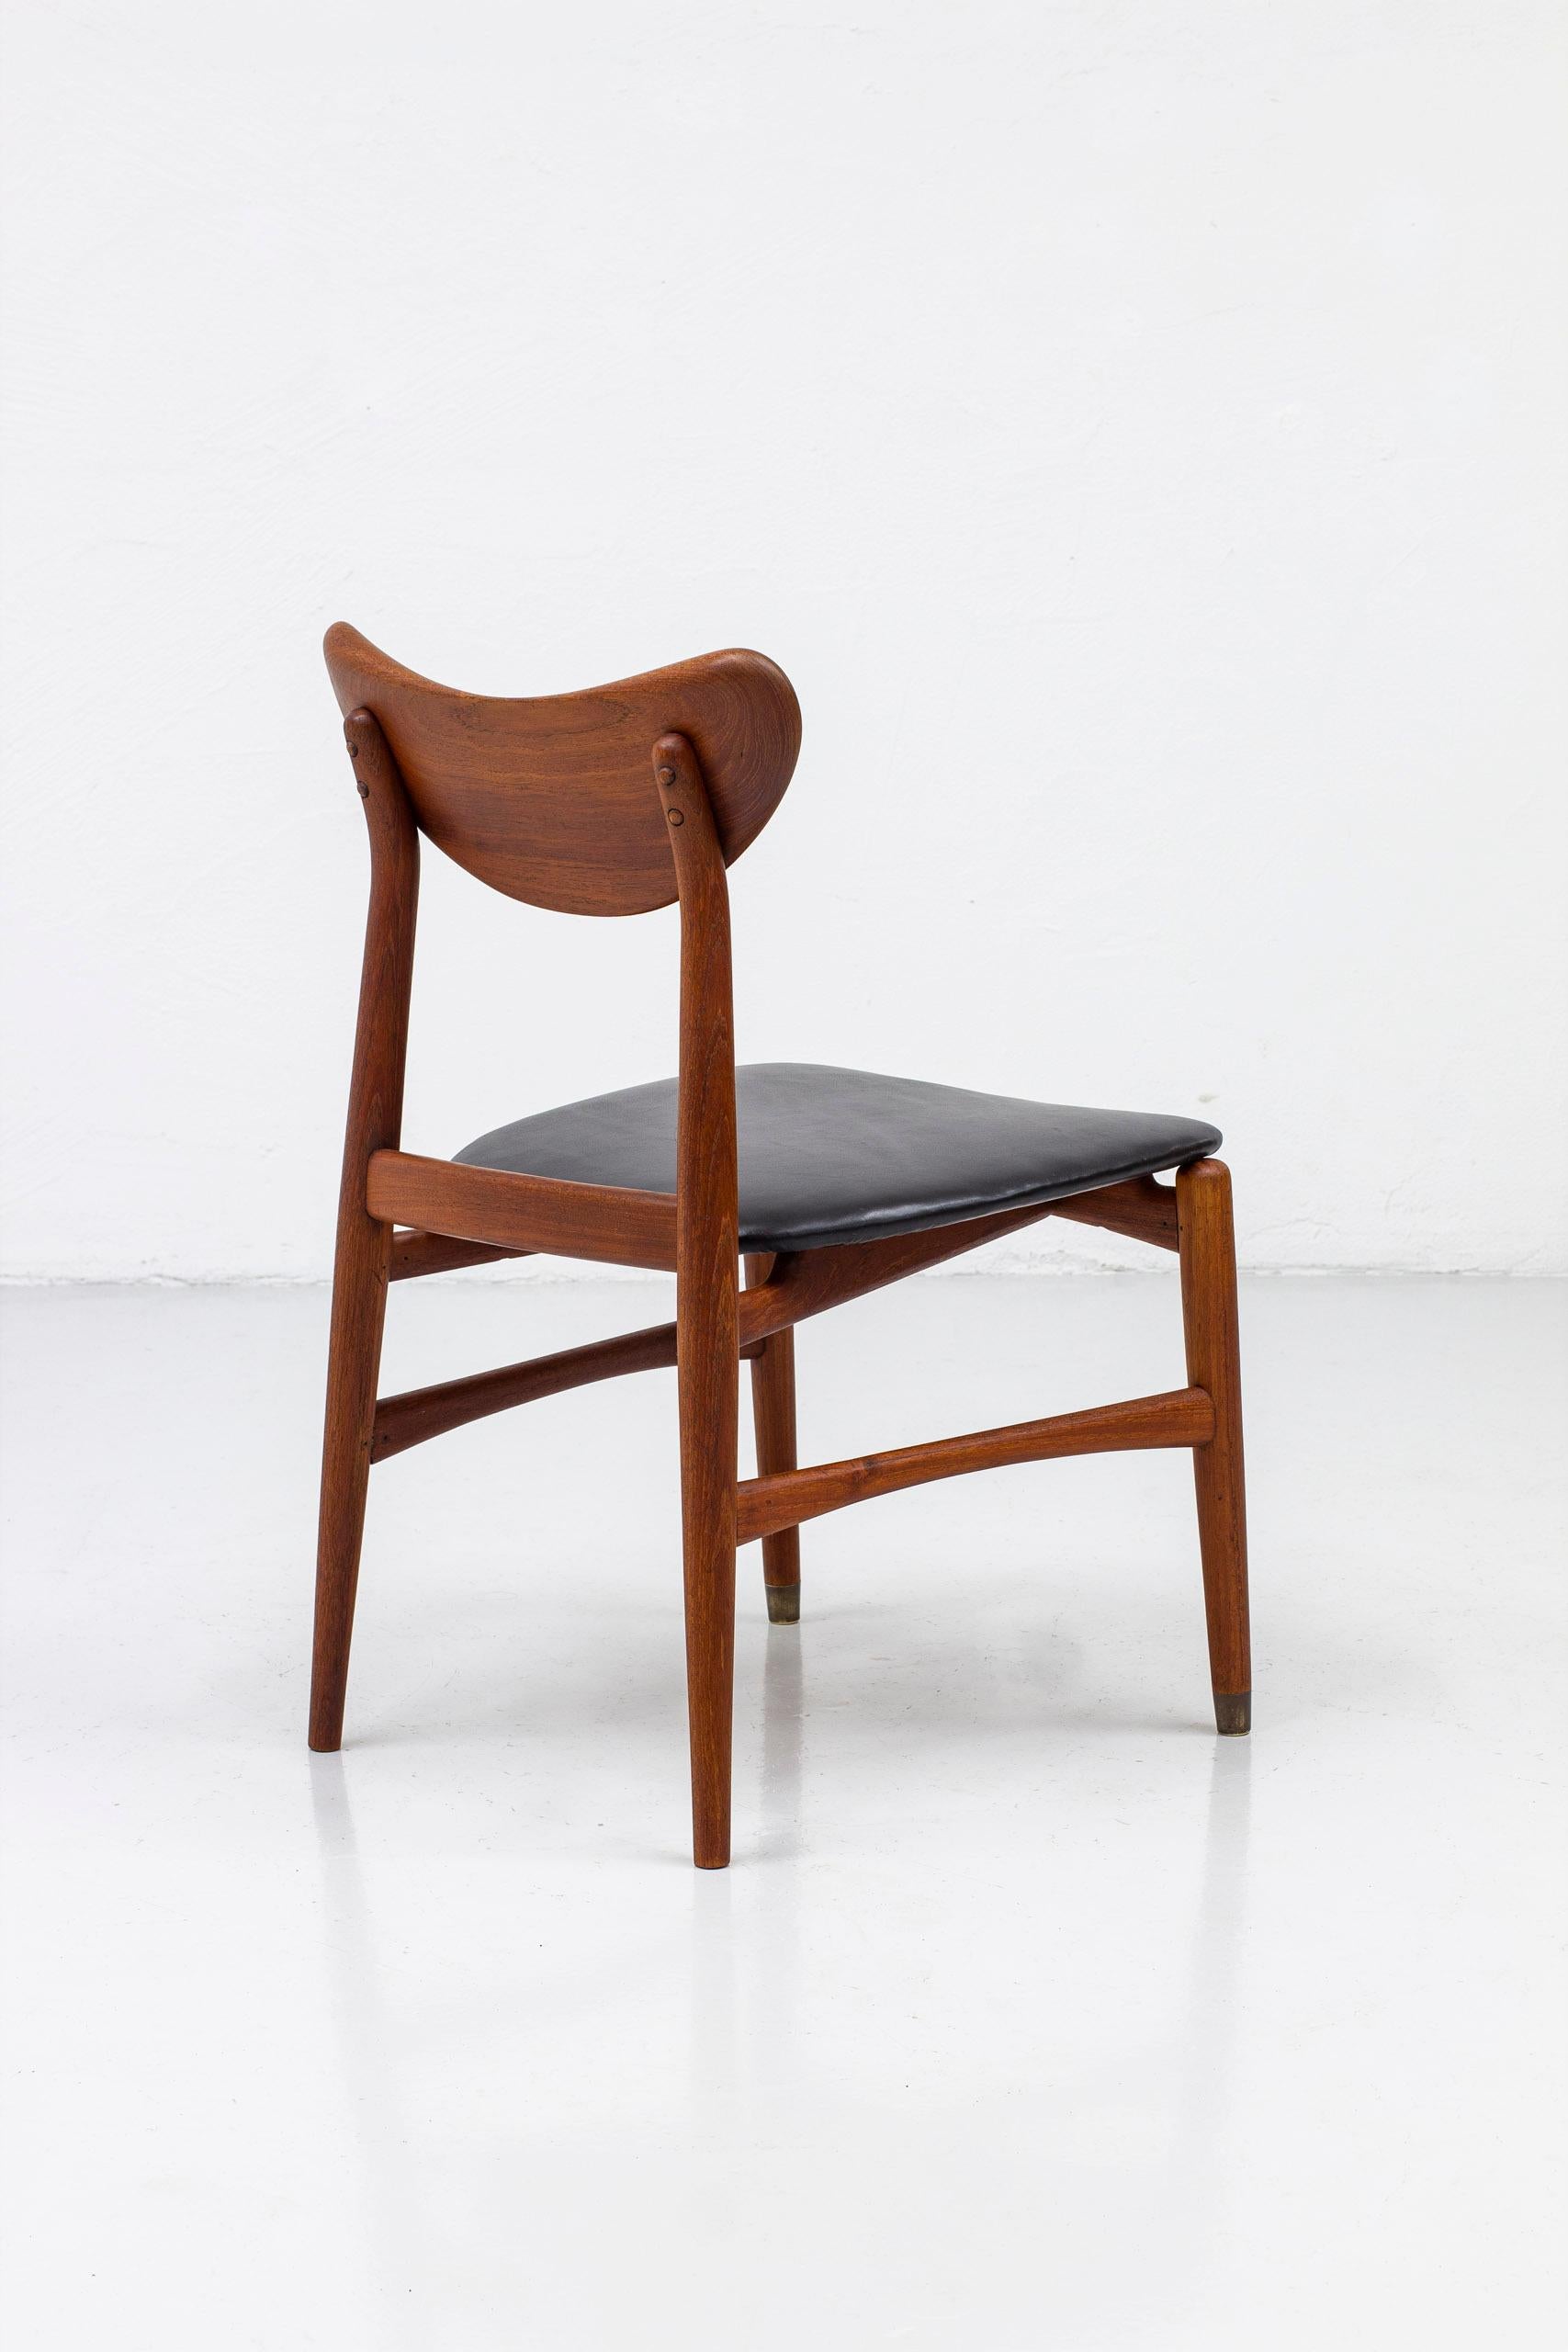 Mid-20th Century Danish Modern Sculpted Side Chair in Teak by Cabinetmaker Oluf Jensen, 50s